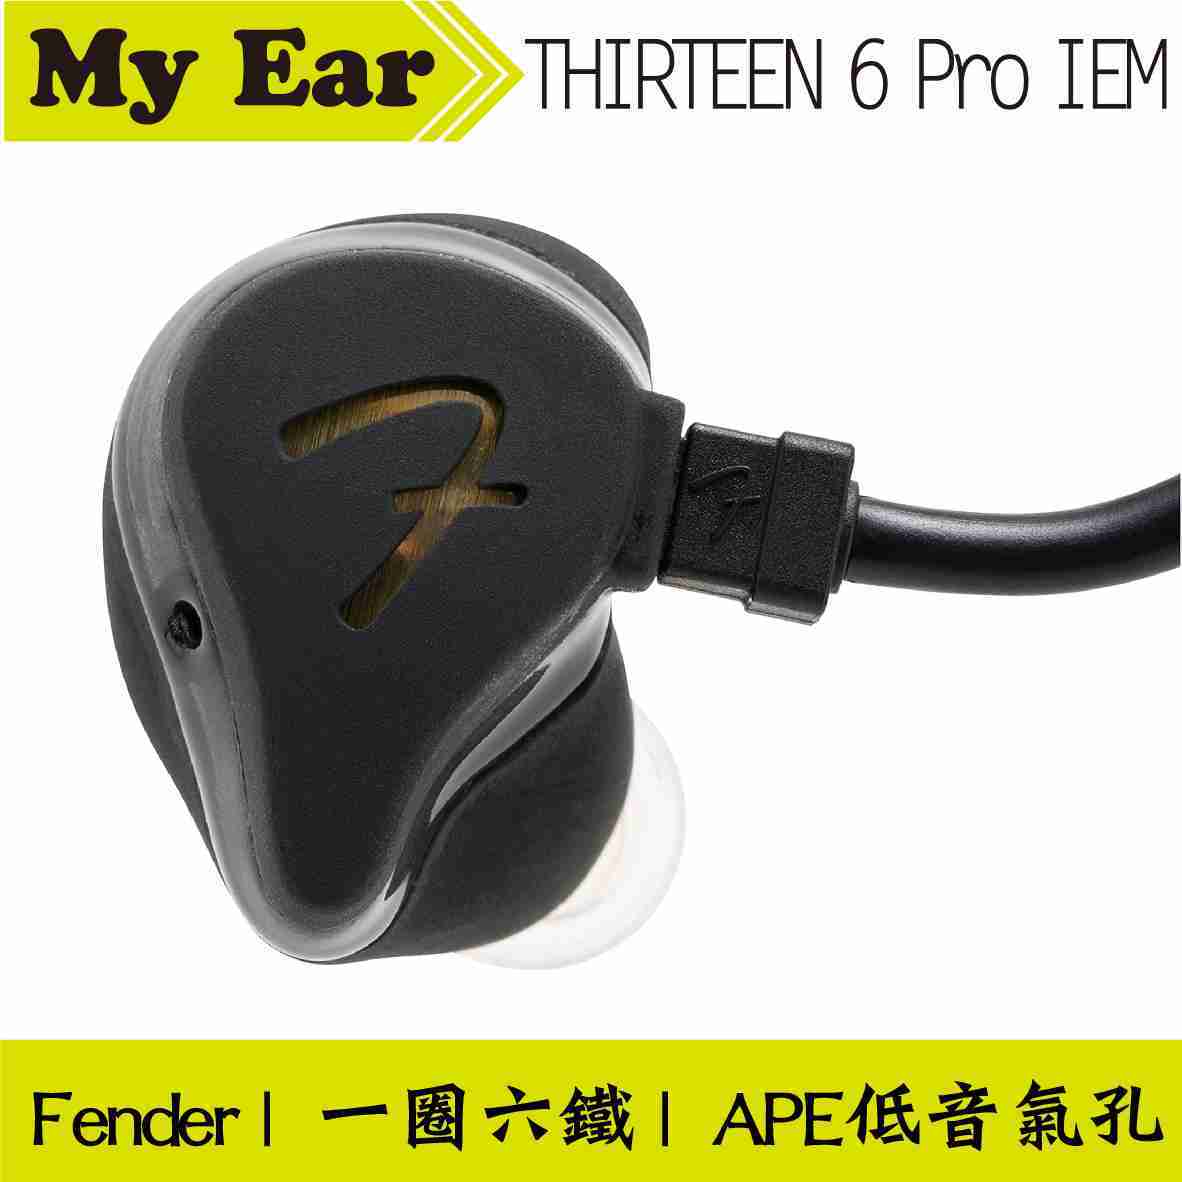 Fender THIRTEEN 6 Pro IEM 黑色 一圈六鐵 監聽 耳機 | My Ear耳機專門店